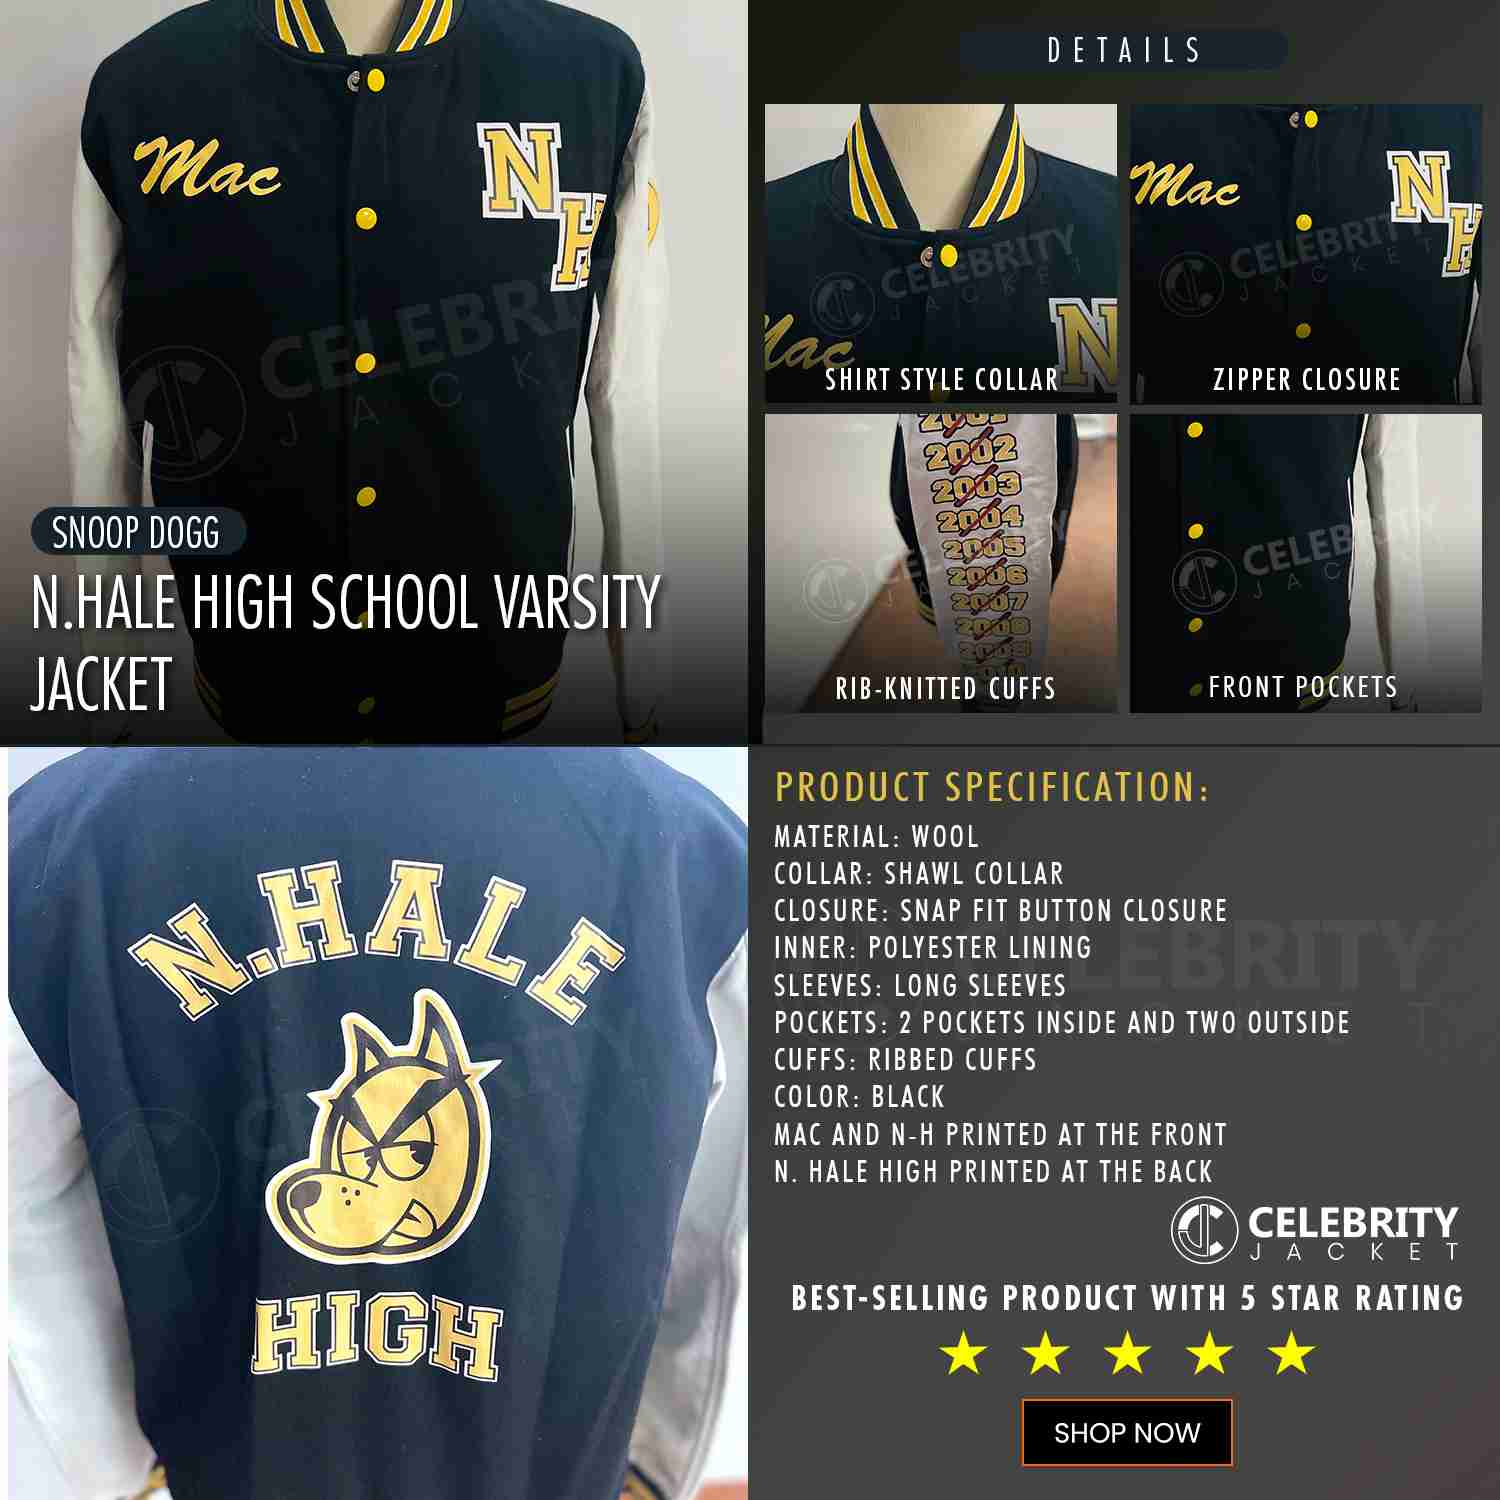 Snoop Dogg N. Hale High School Varsity Letterman-Style Jacket